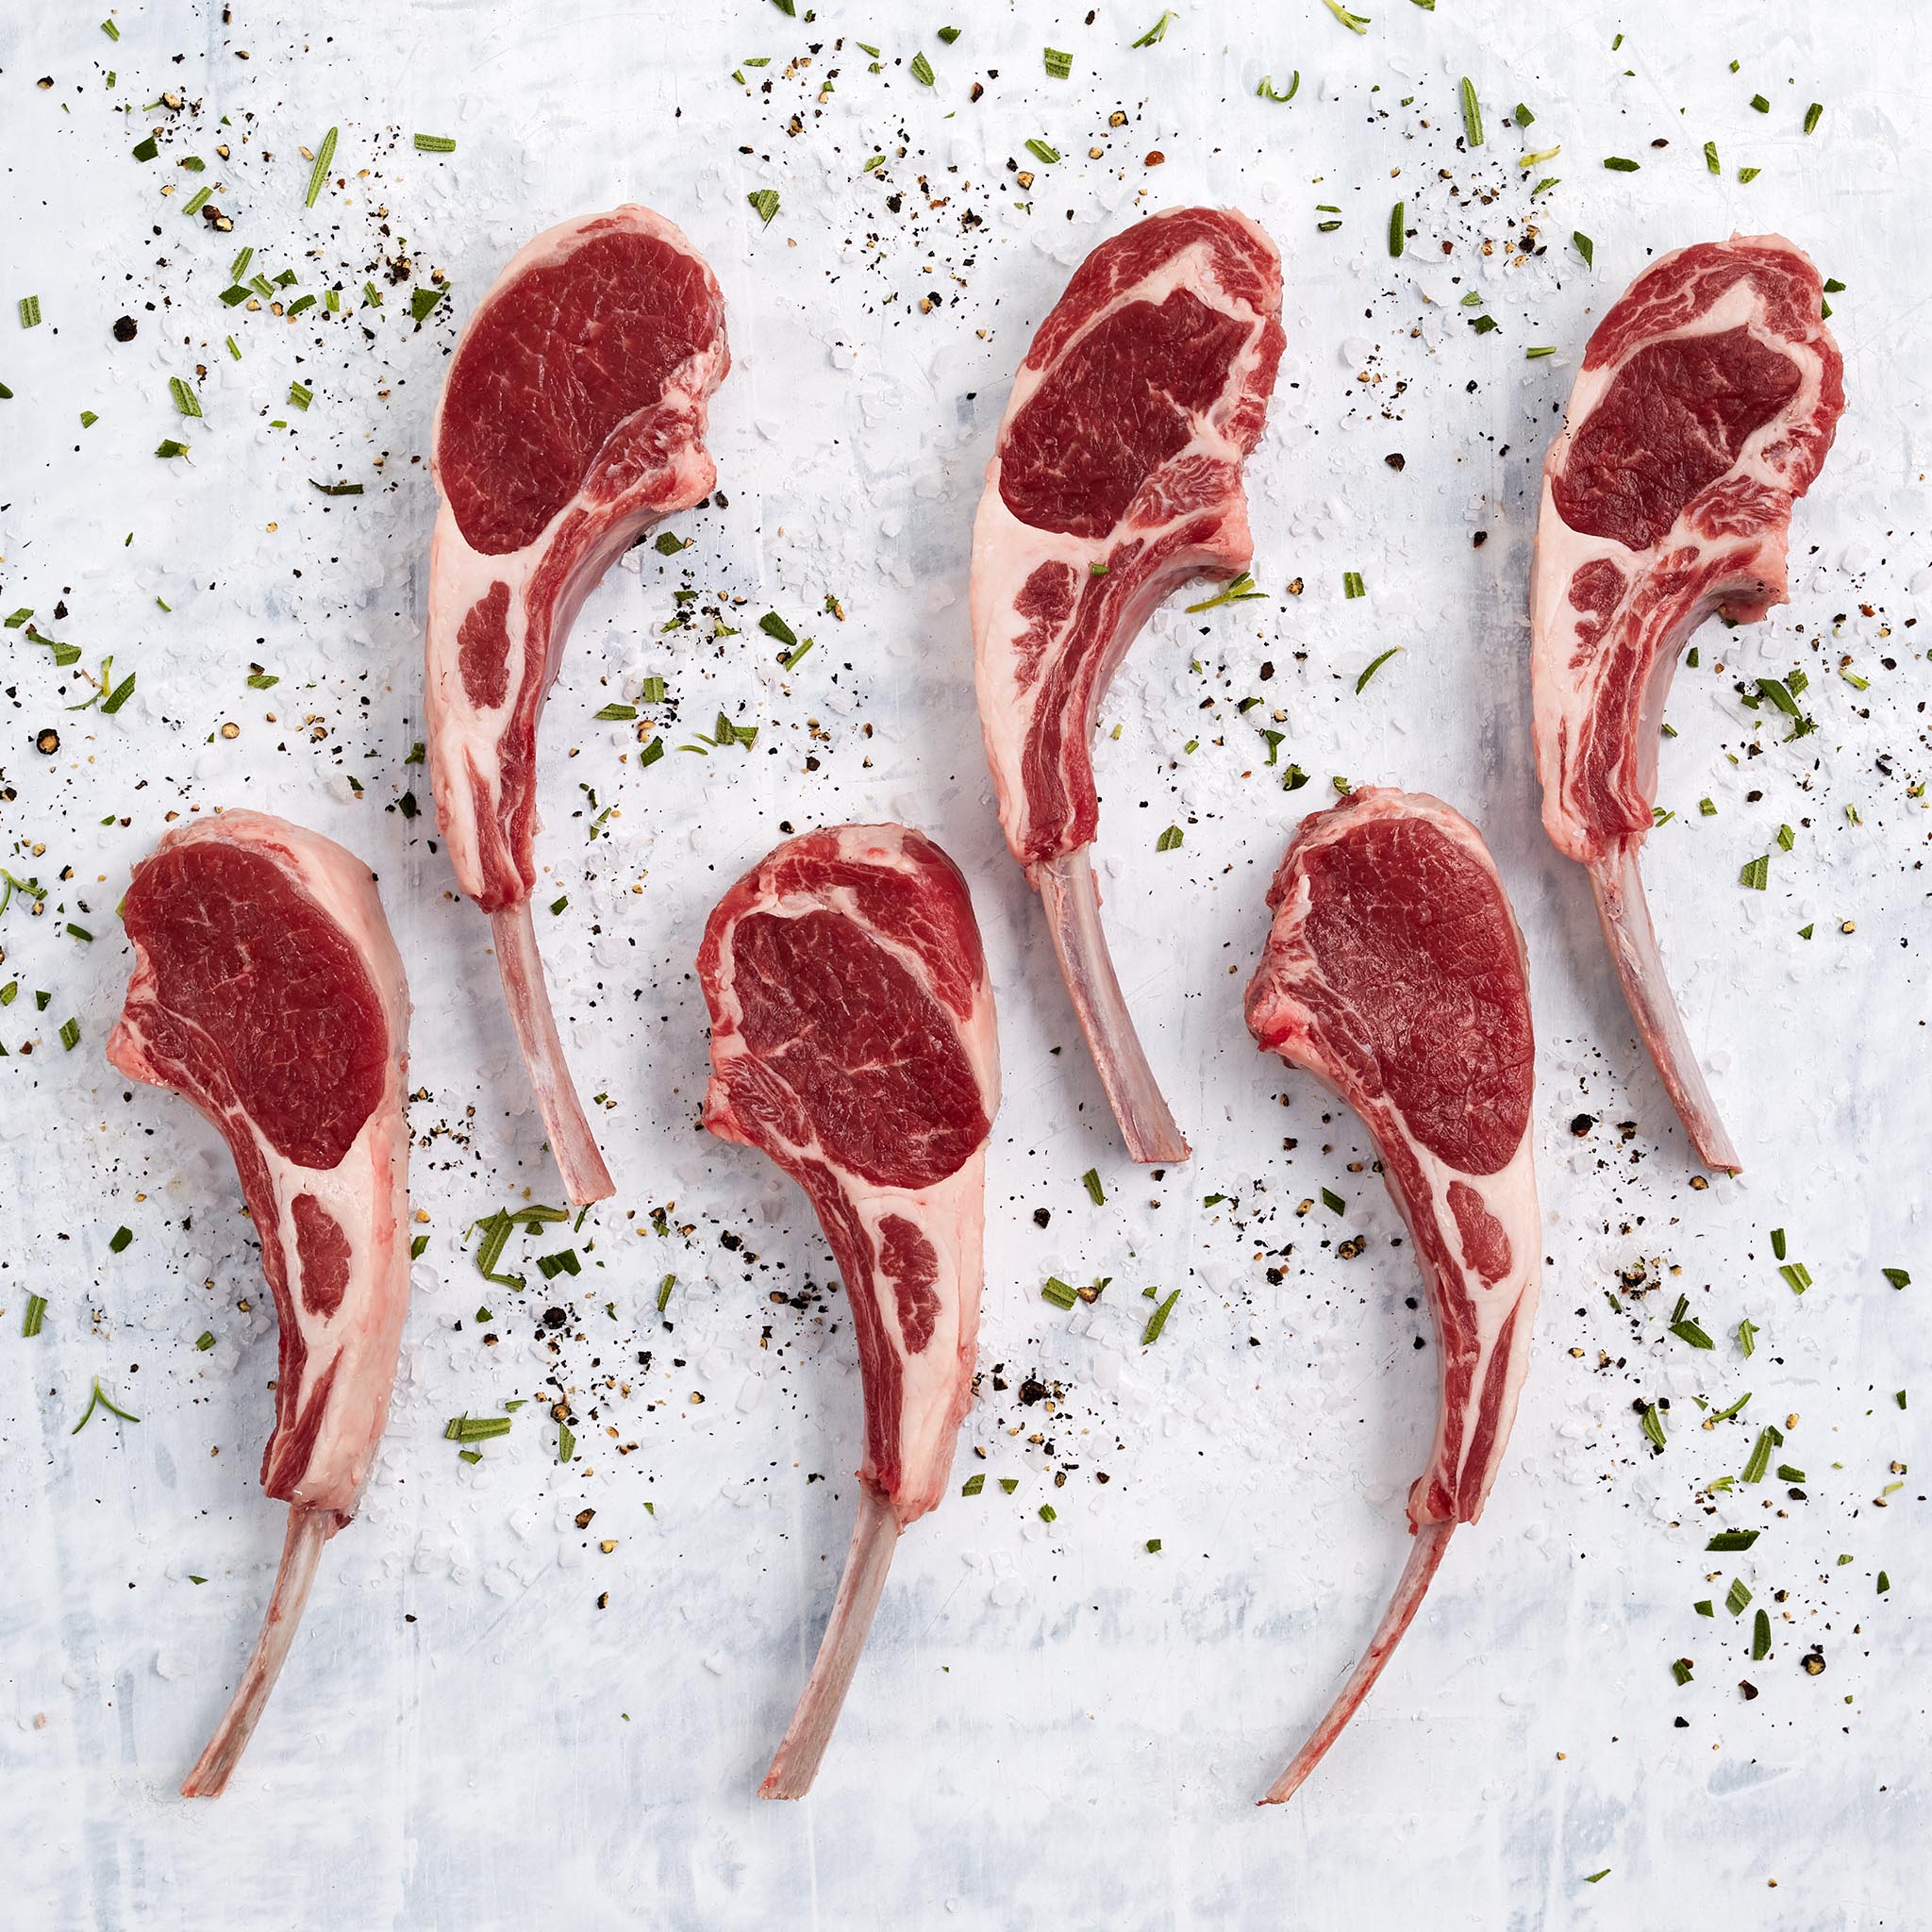 Lamb Rib Chops Per kg, Fresh Lamb, Fresh Meat & Poultry, Fresh Food, Food